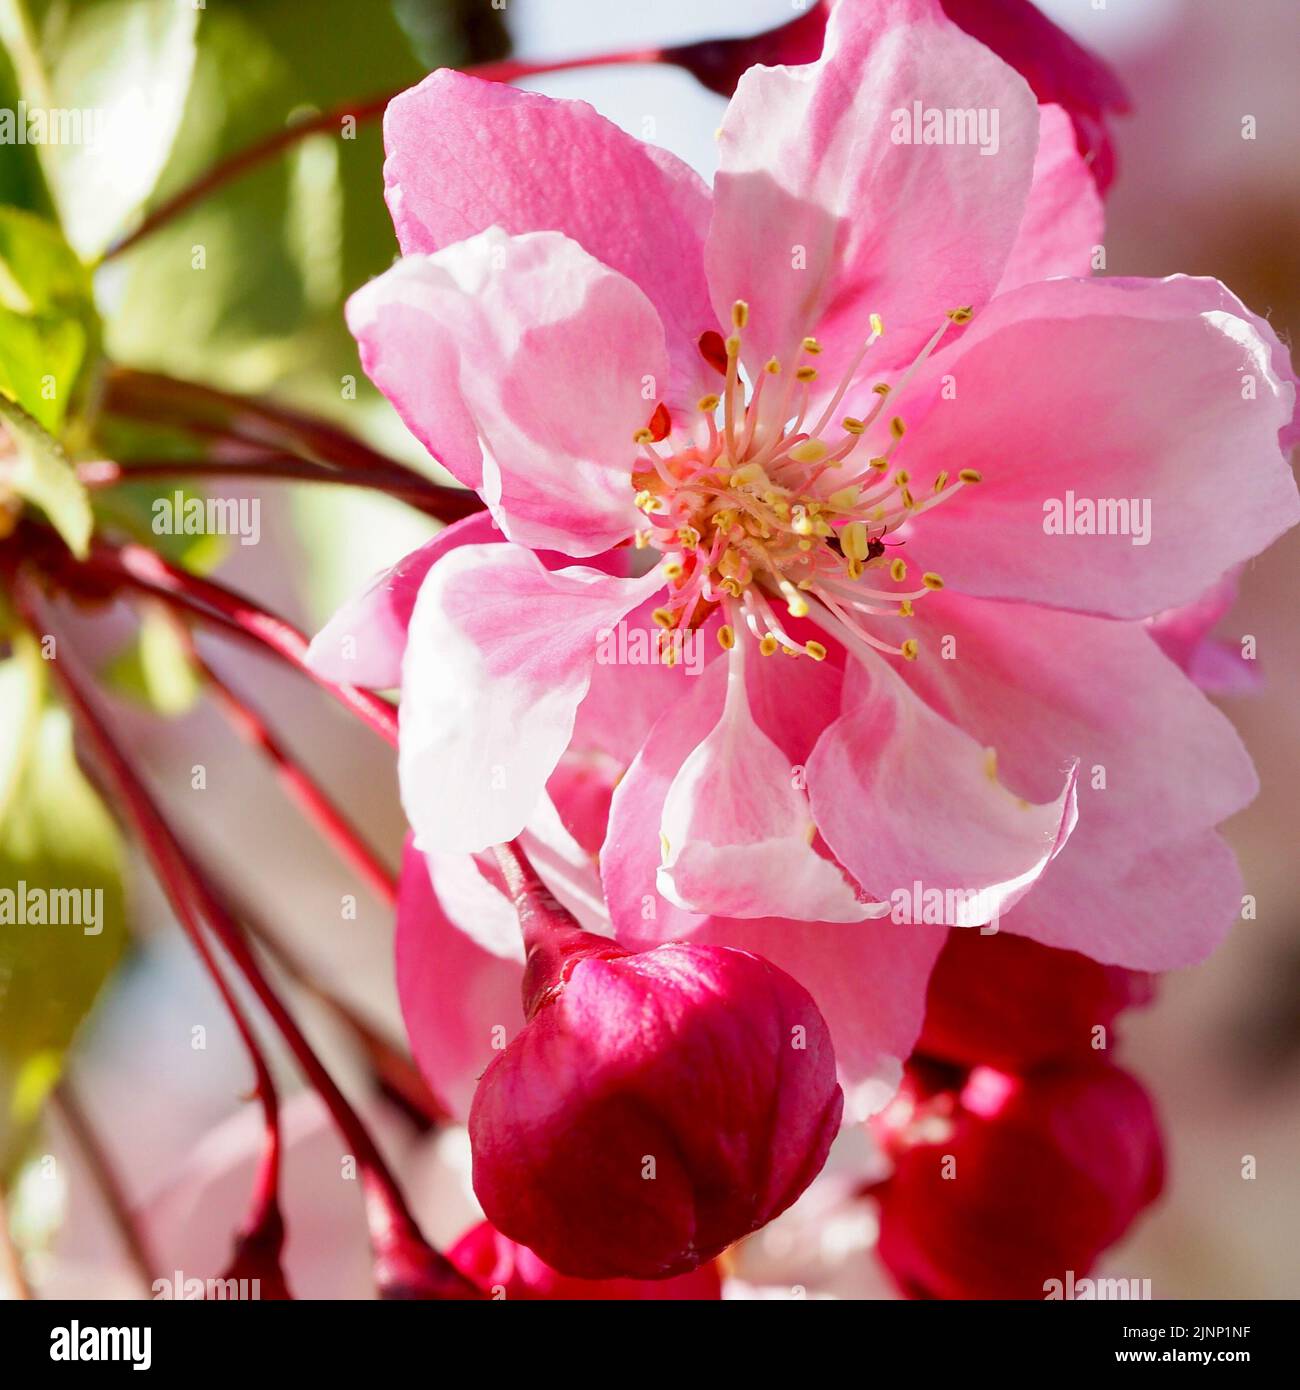 Apfelblüte mit kleinen Äpfeln Apfel Stock Photo